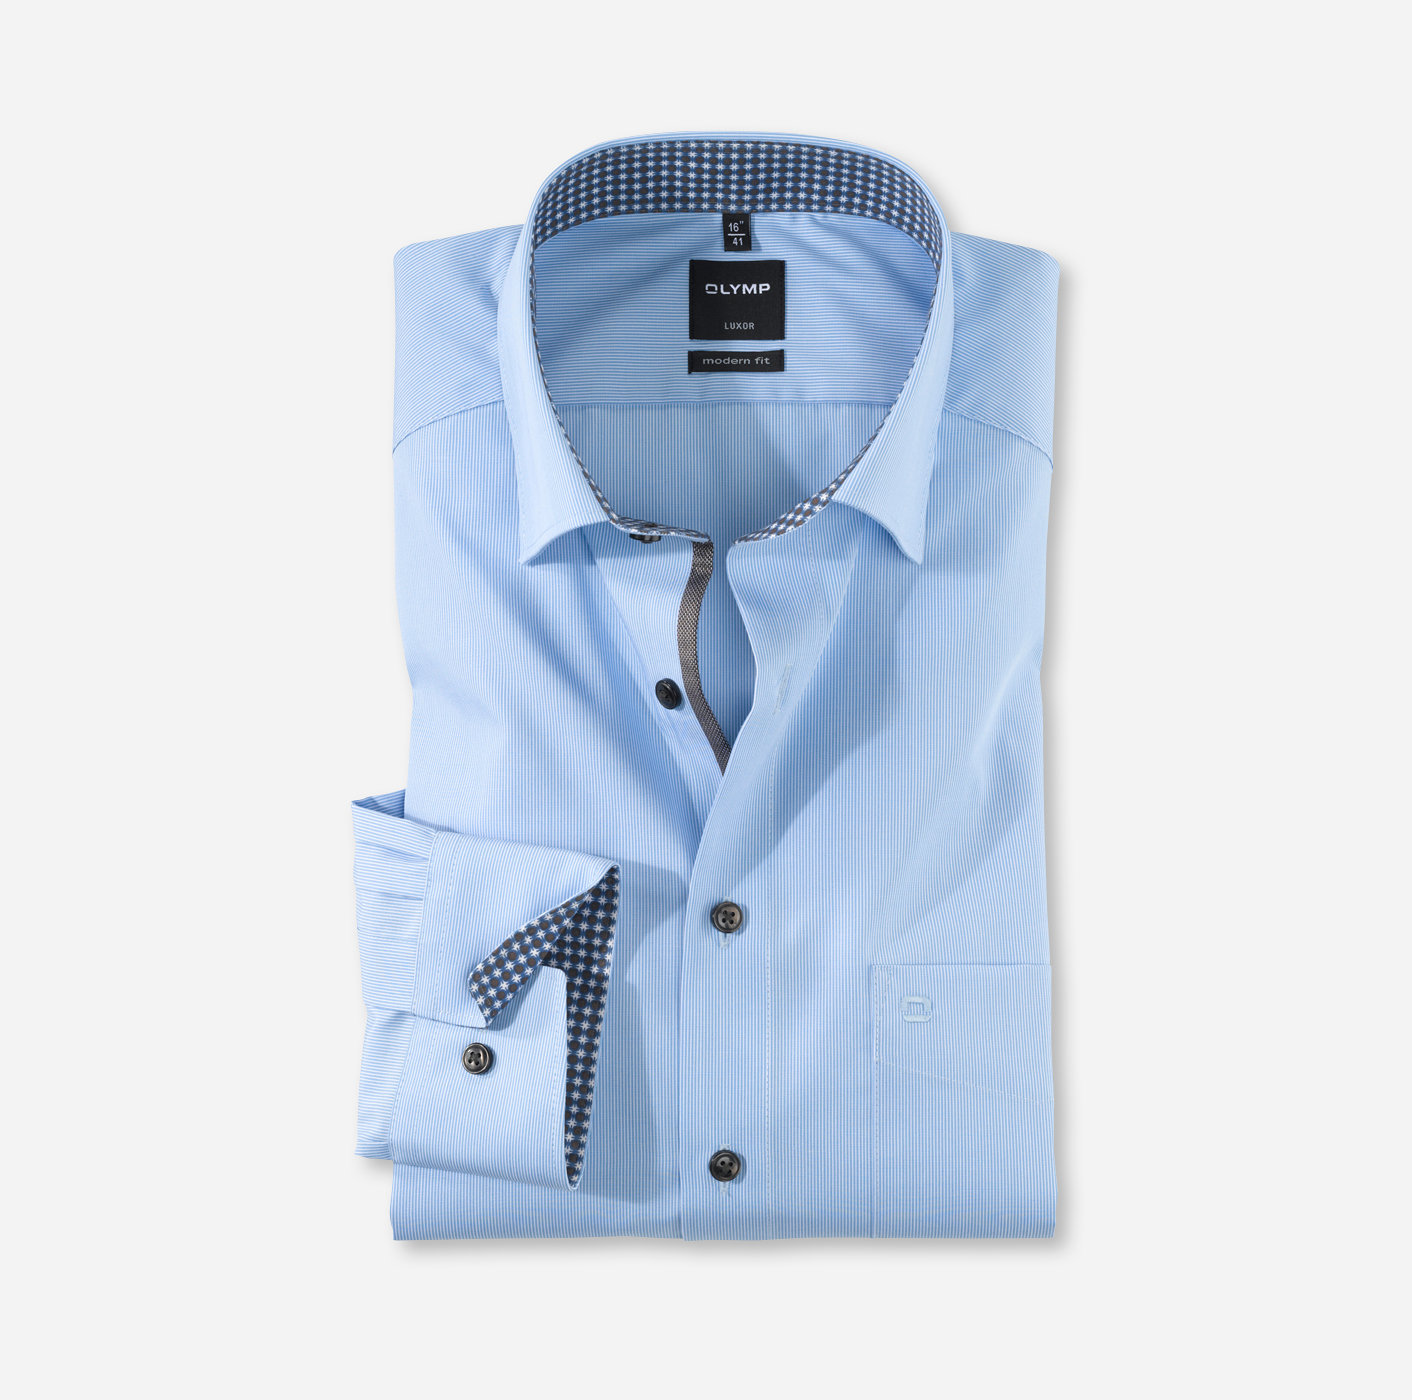 OLYMP Luxor, modern fit, Businesshemd, Extra langer Arm, Under-Button-down, Bleu